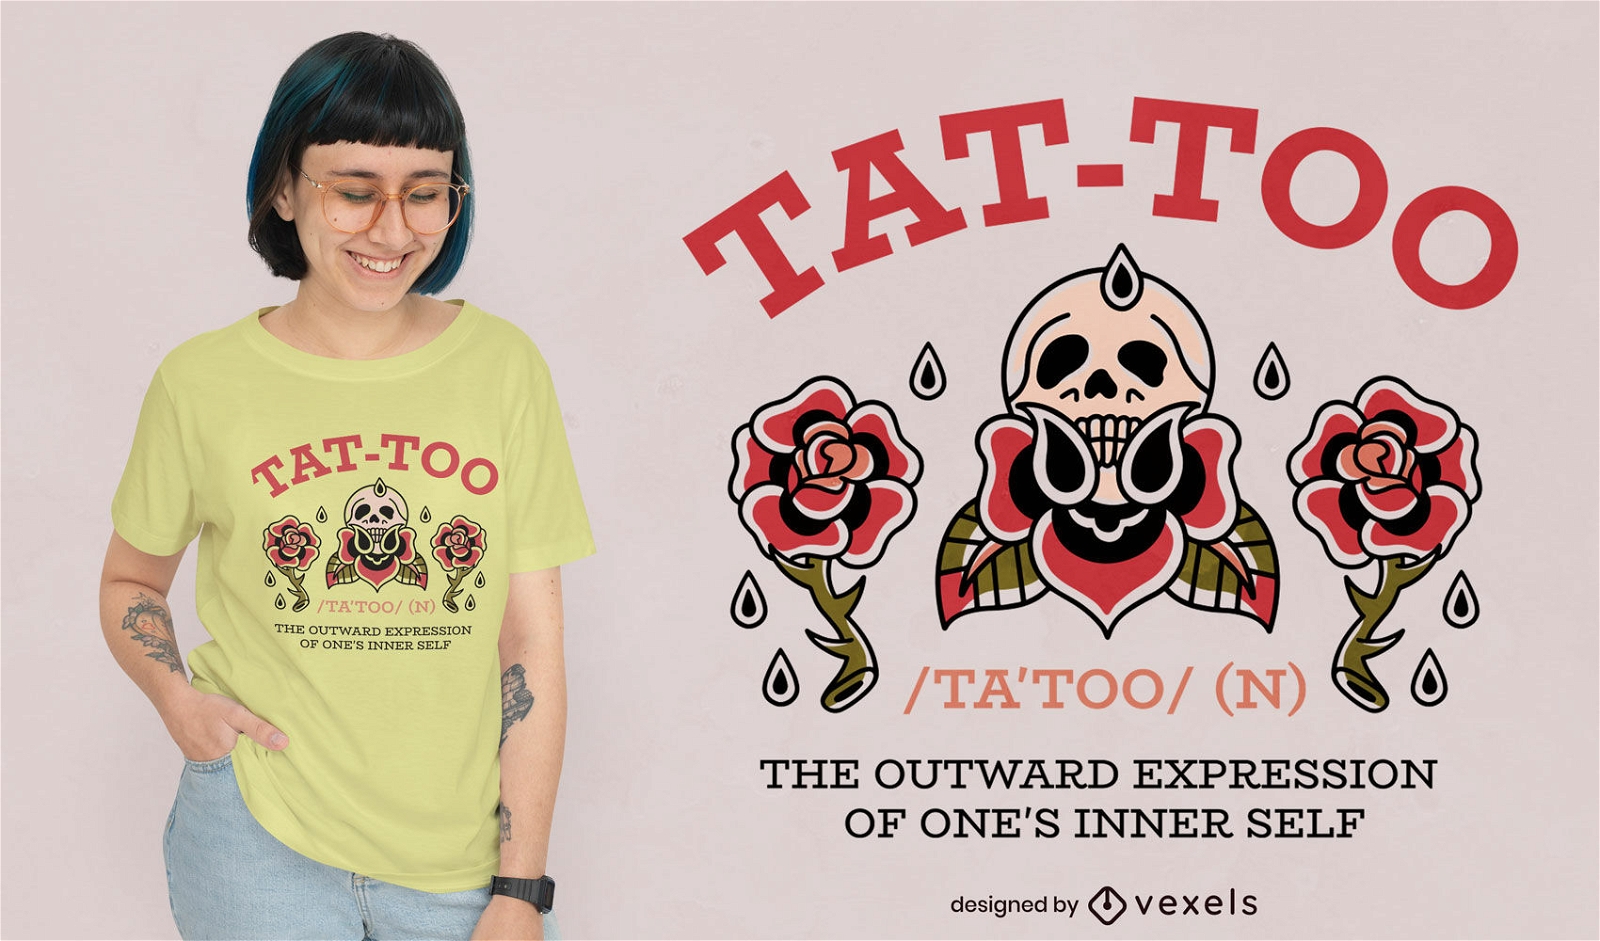 Skull and rose flowers tattoo t-shirt design